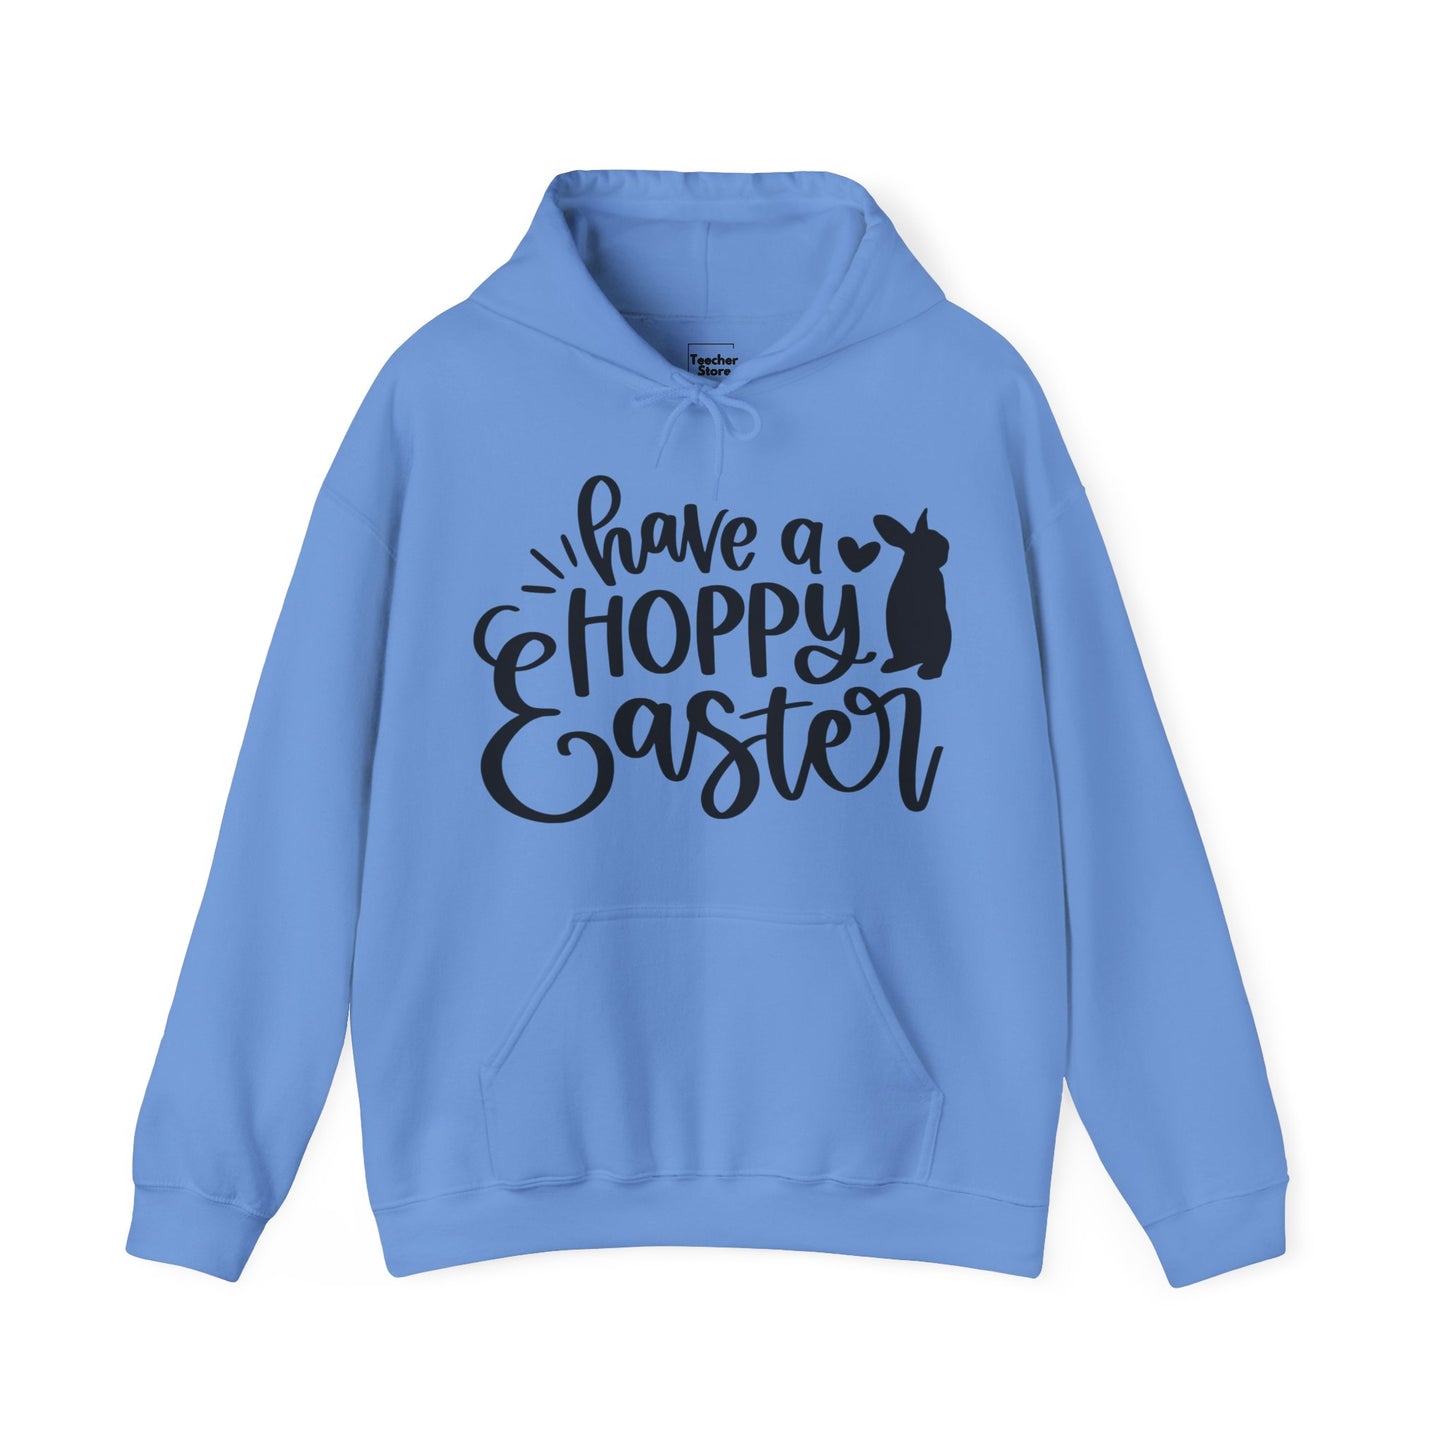 Hoppy Easter Hooded Sweatshirt